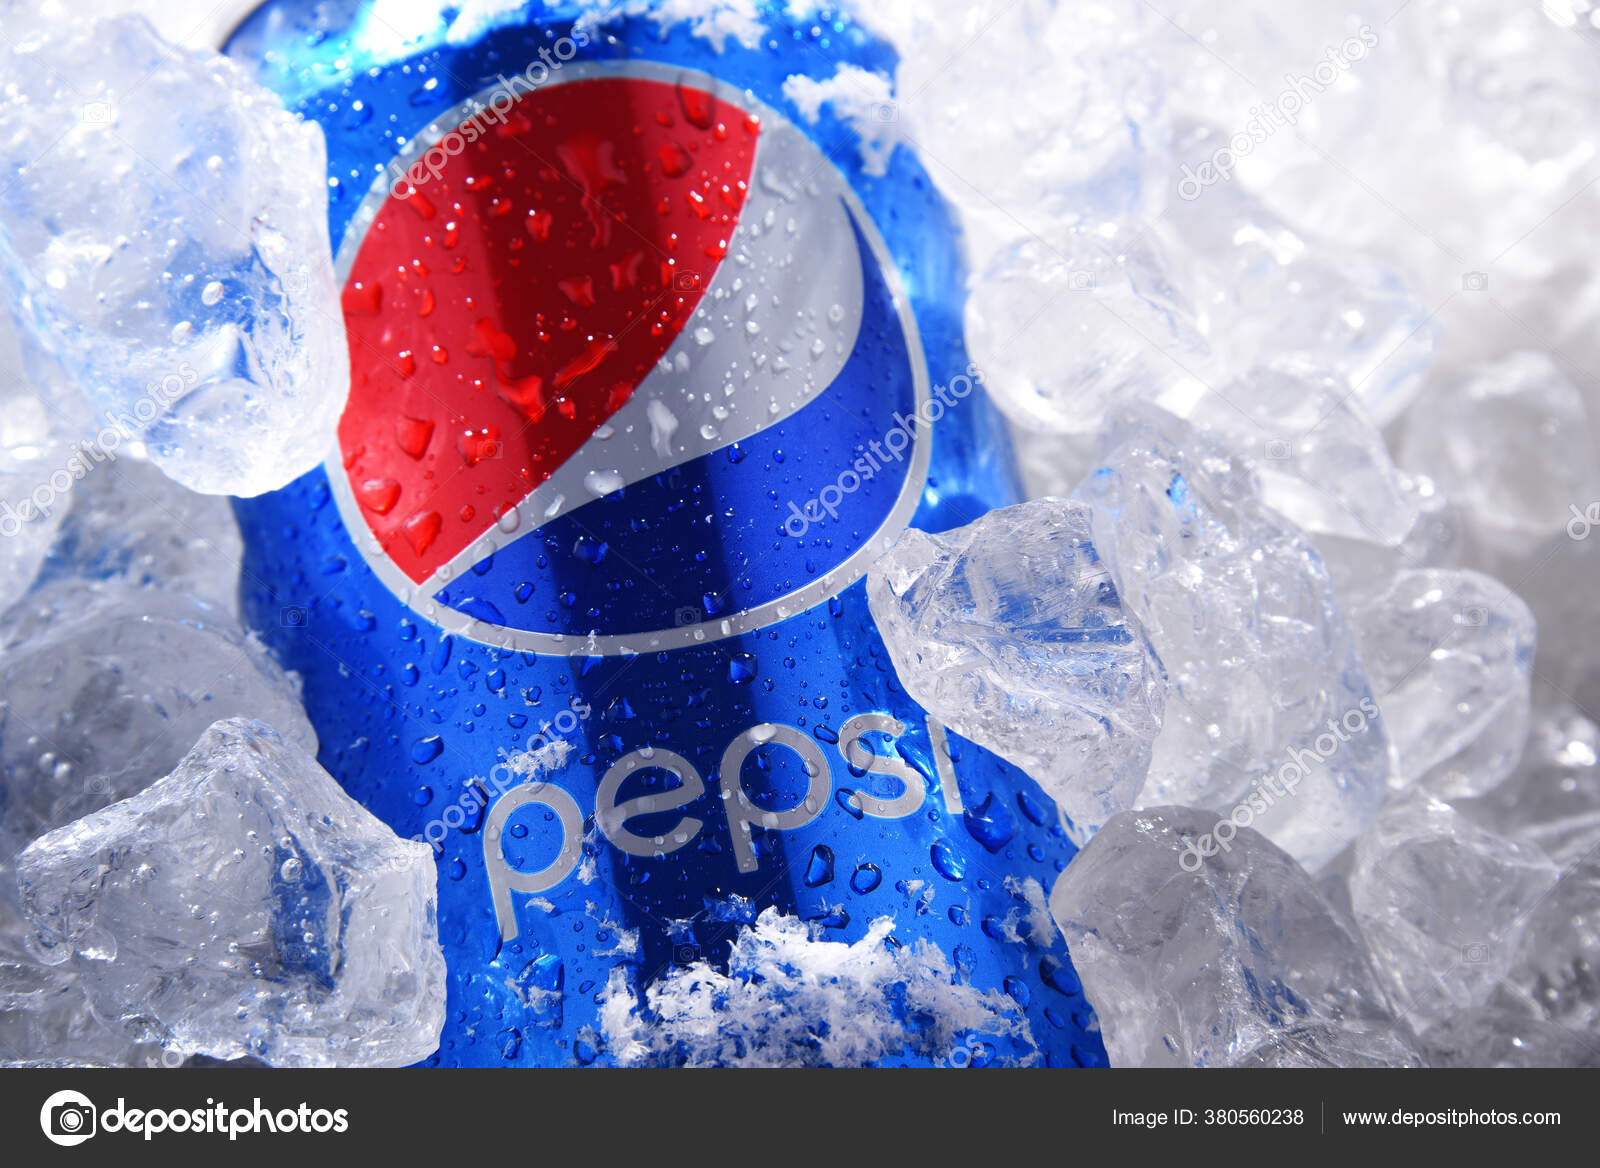 Pepsi cola Stock Photos, Royalty Free Pepsi cola Images | Depositphotos